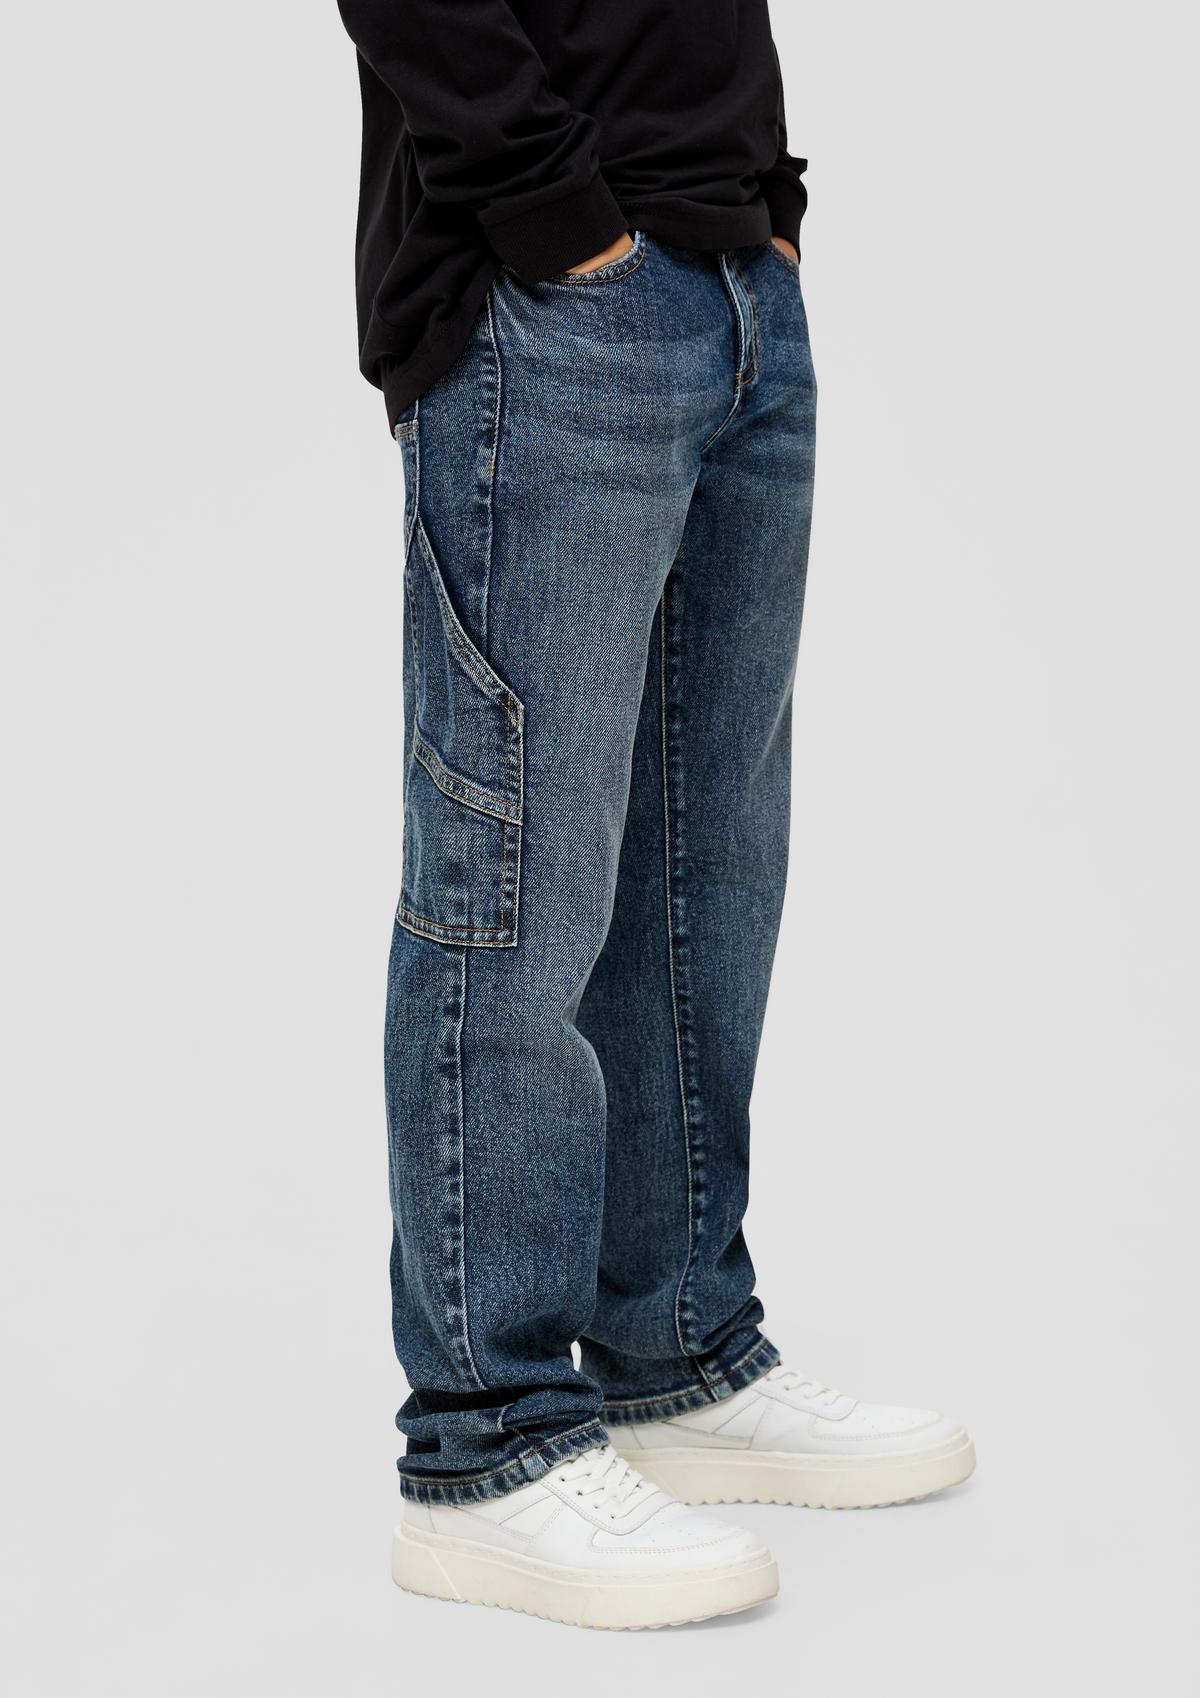 Pete jeans / regular fit / mid rise / slim leg